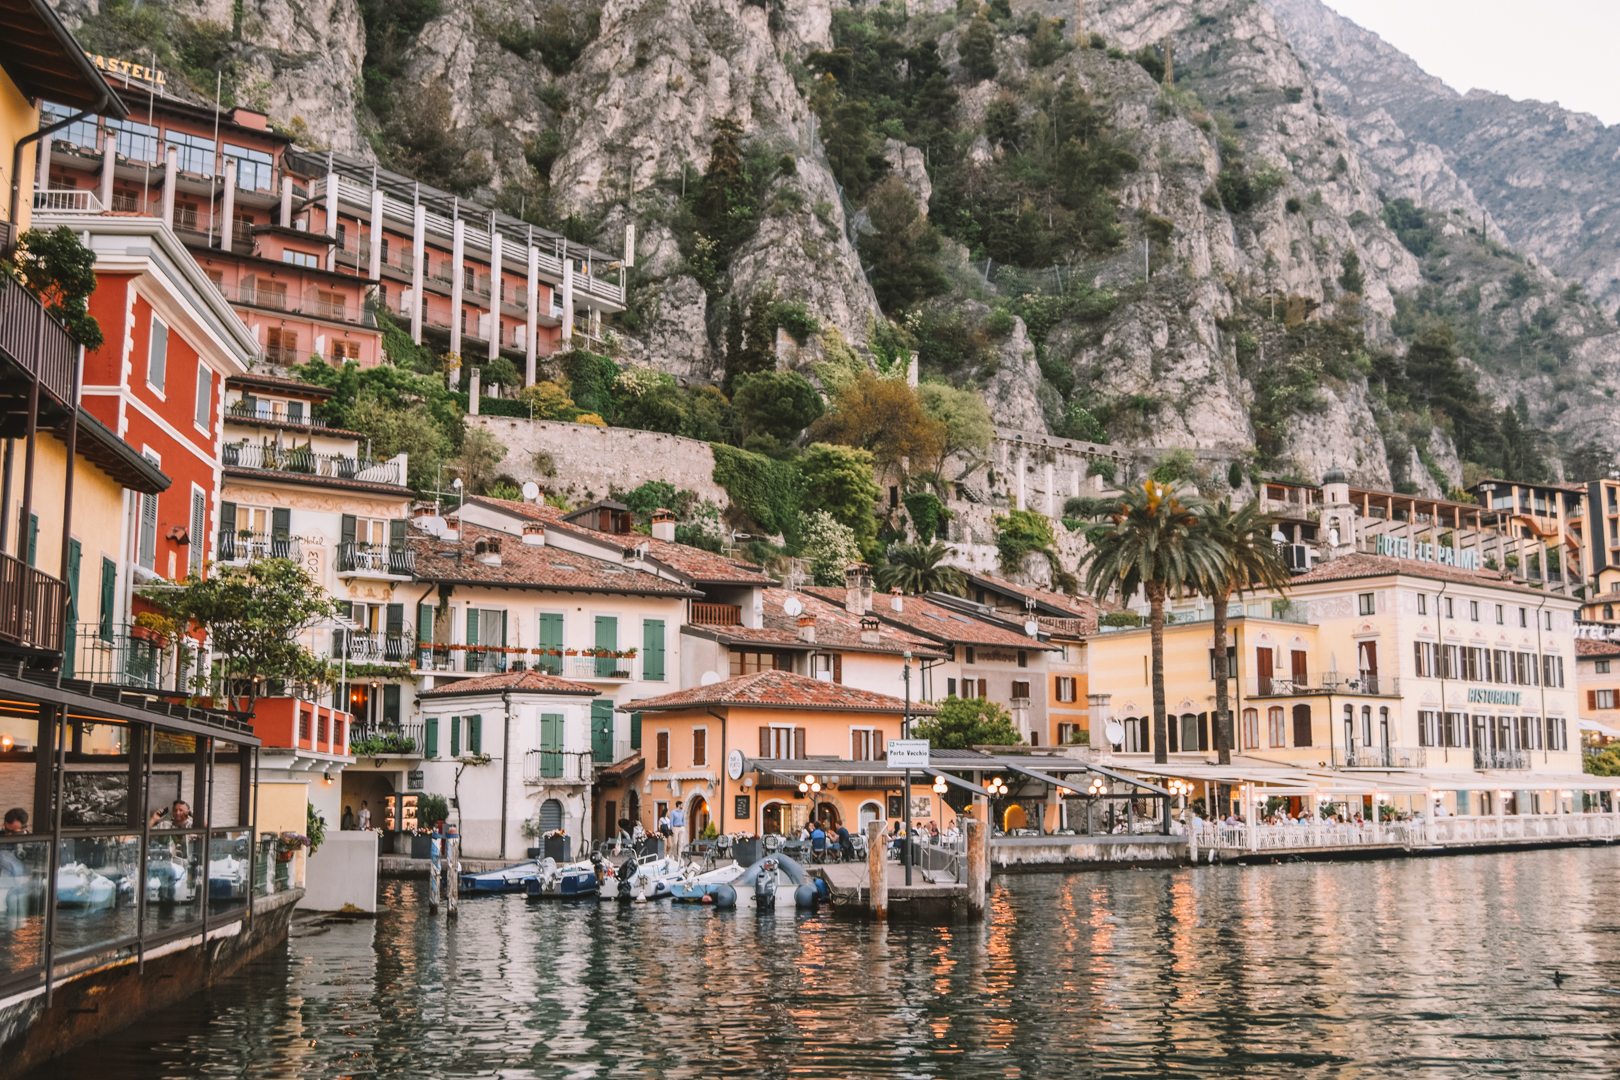 Limone Sul Garda, Italy: Everything You Need To Know